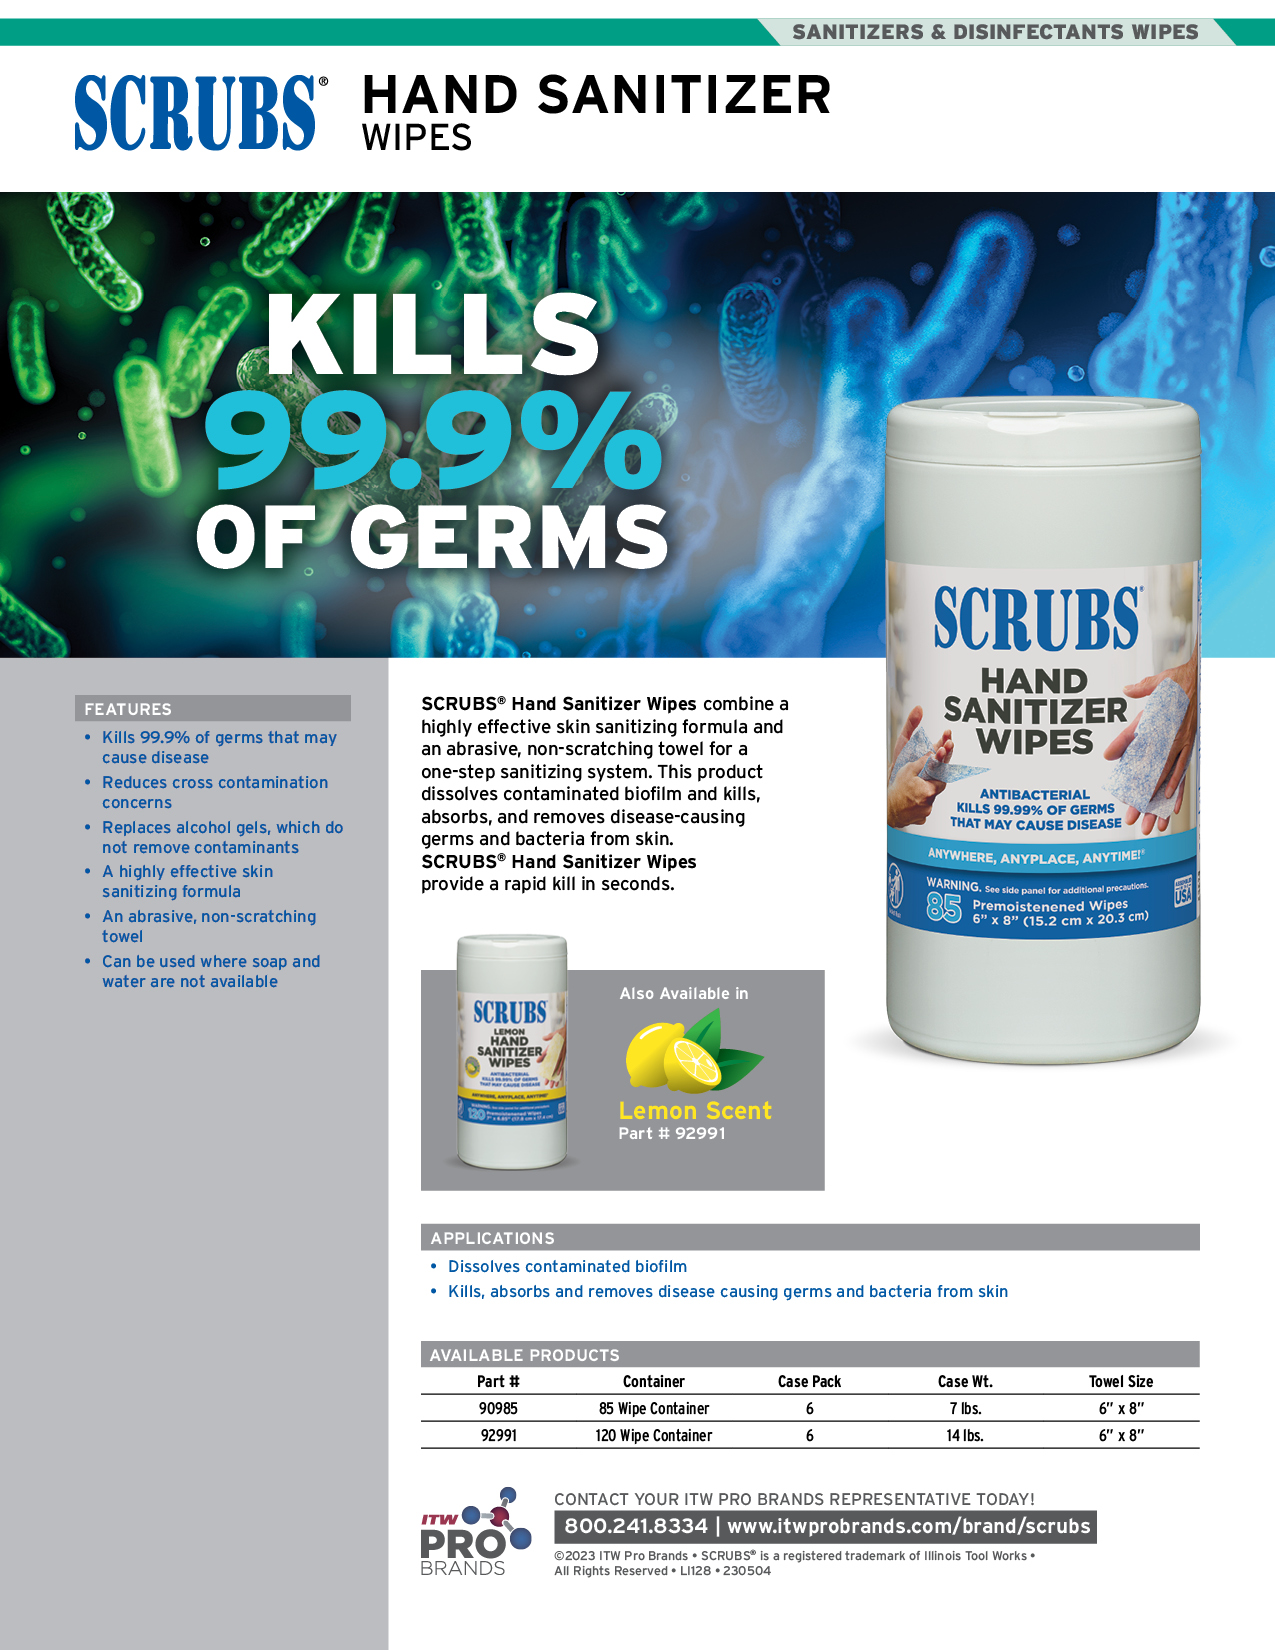 SCRUBS Hand Sanitizer Wipes Sell Sheet 